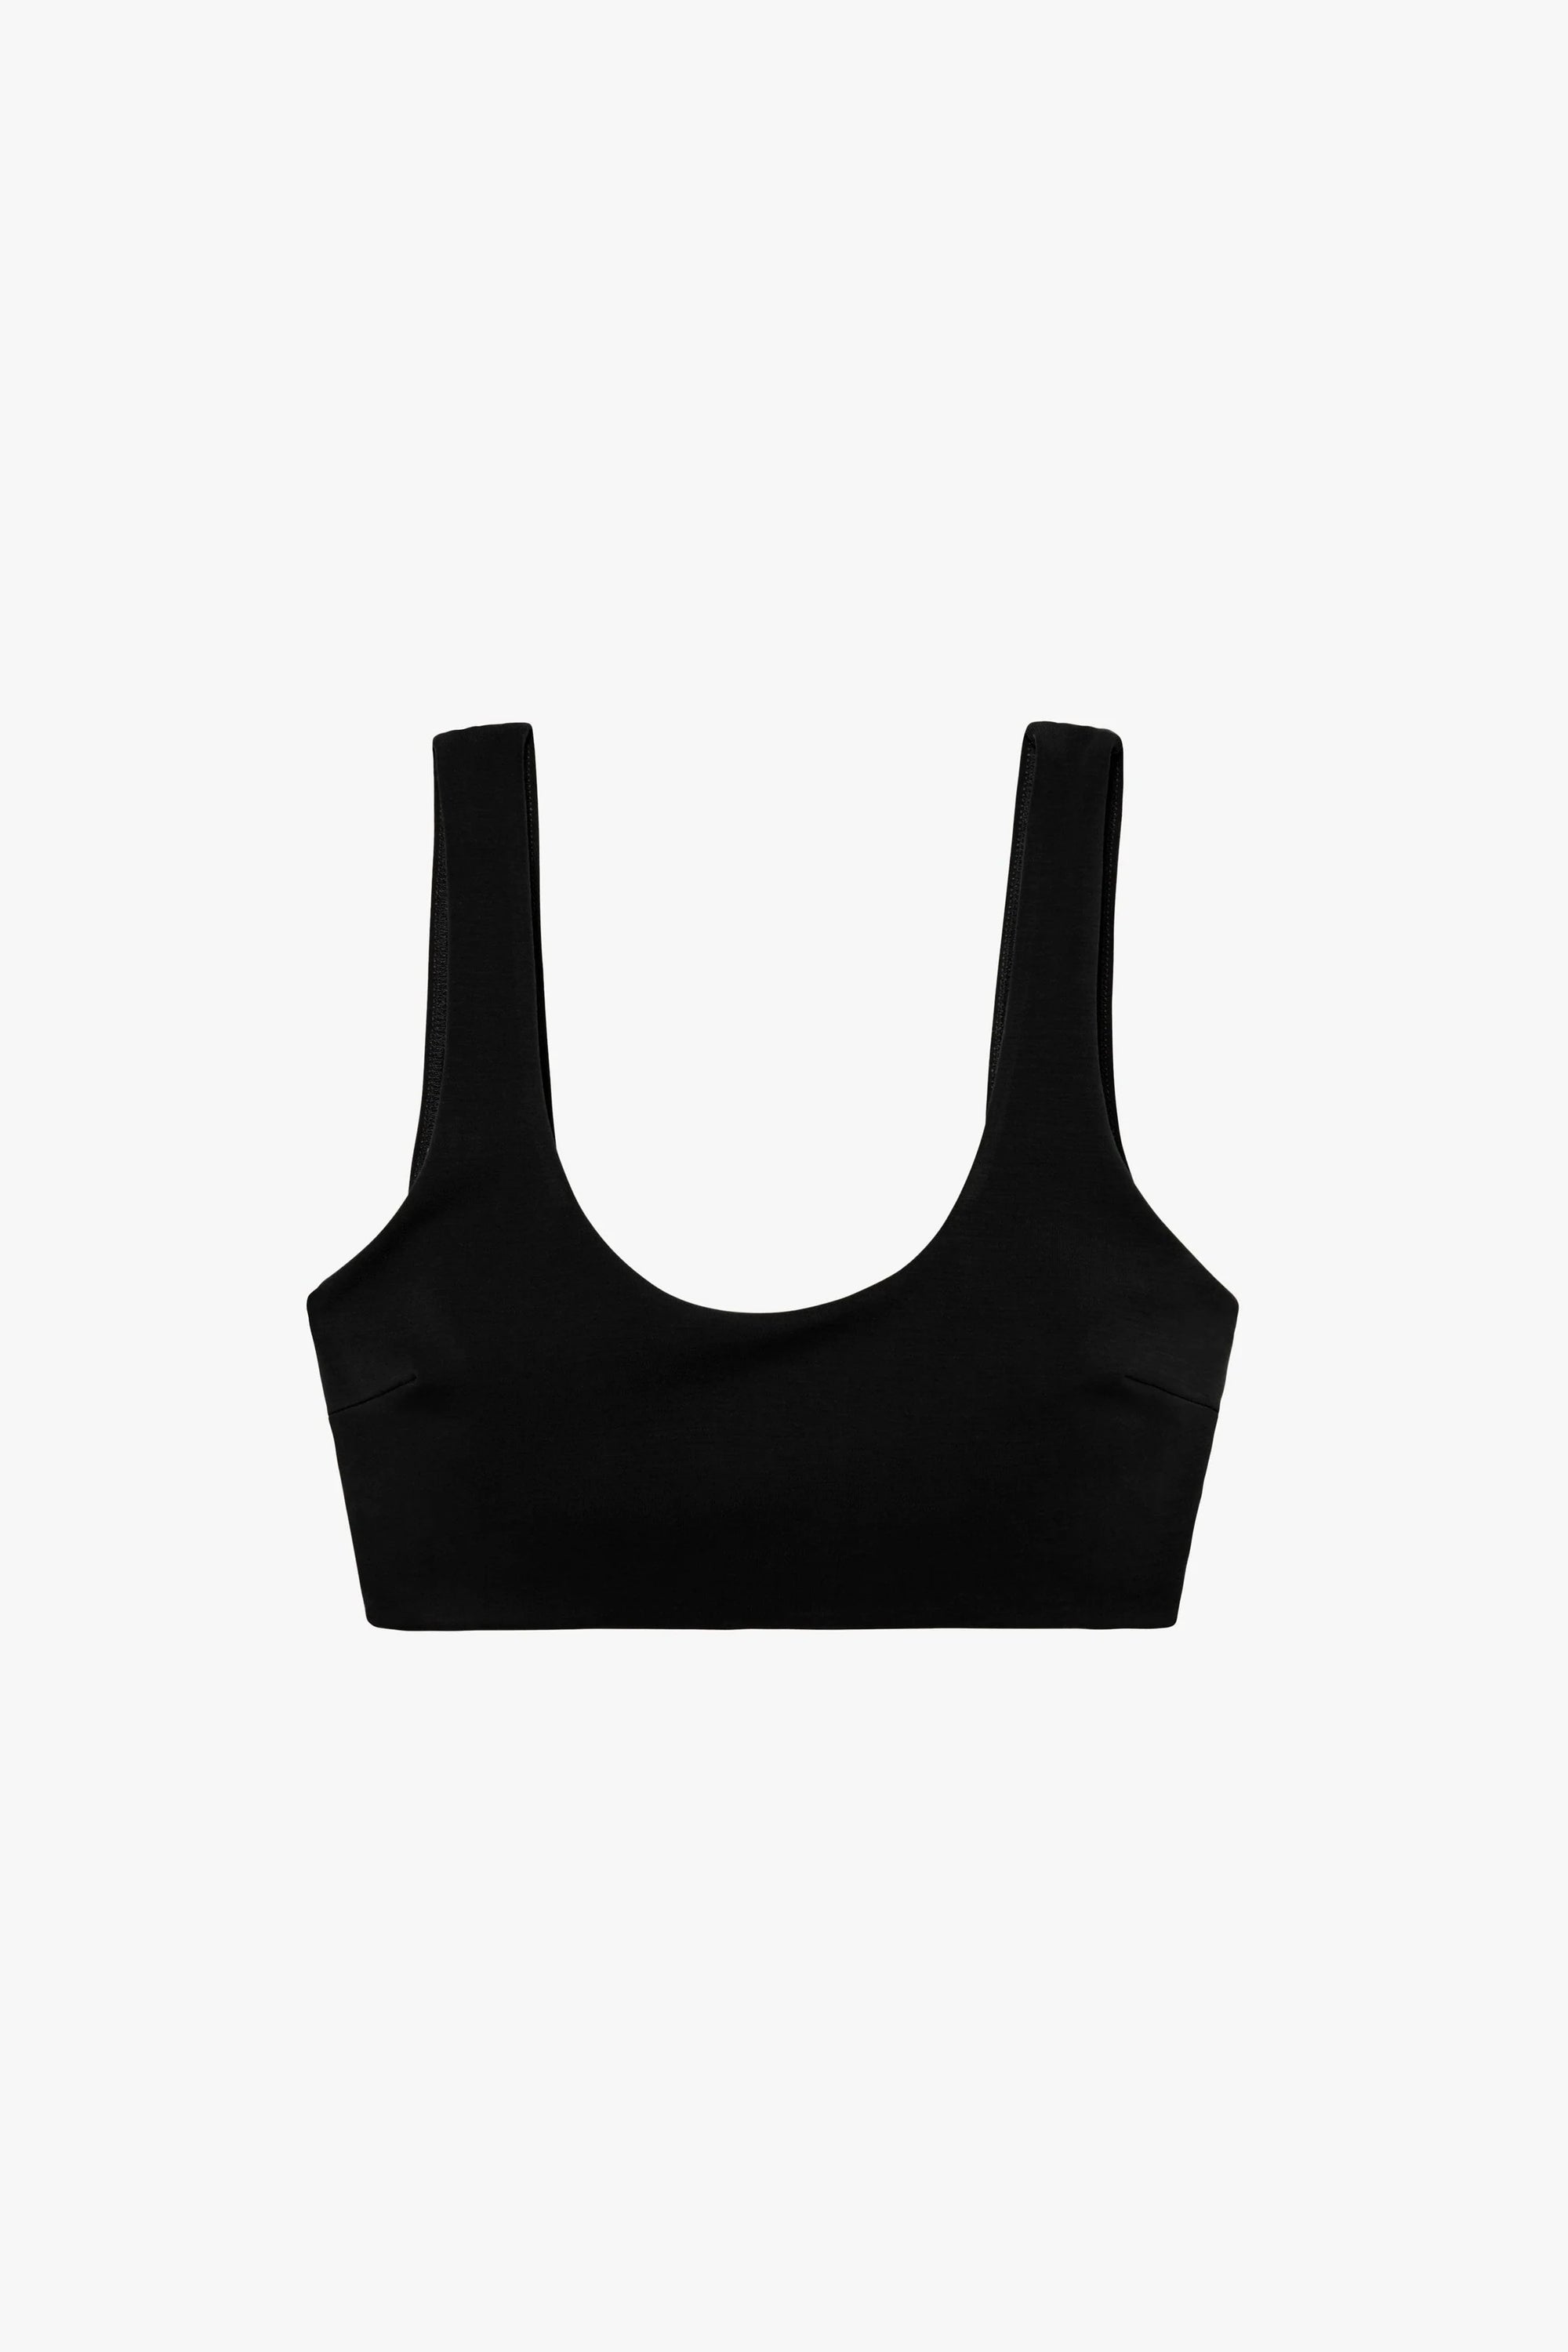 Lira Bikini Top in Black by Mara Hoffman